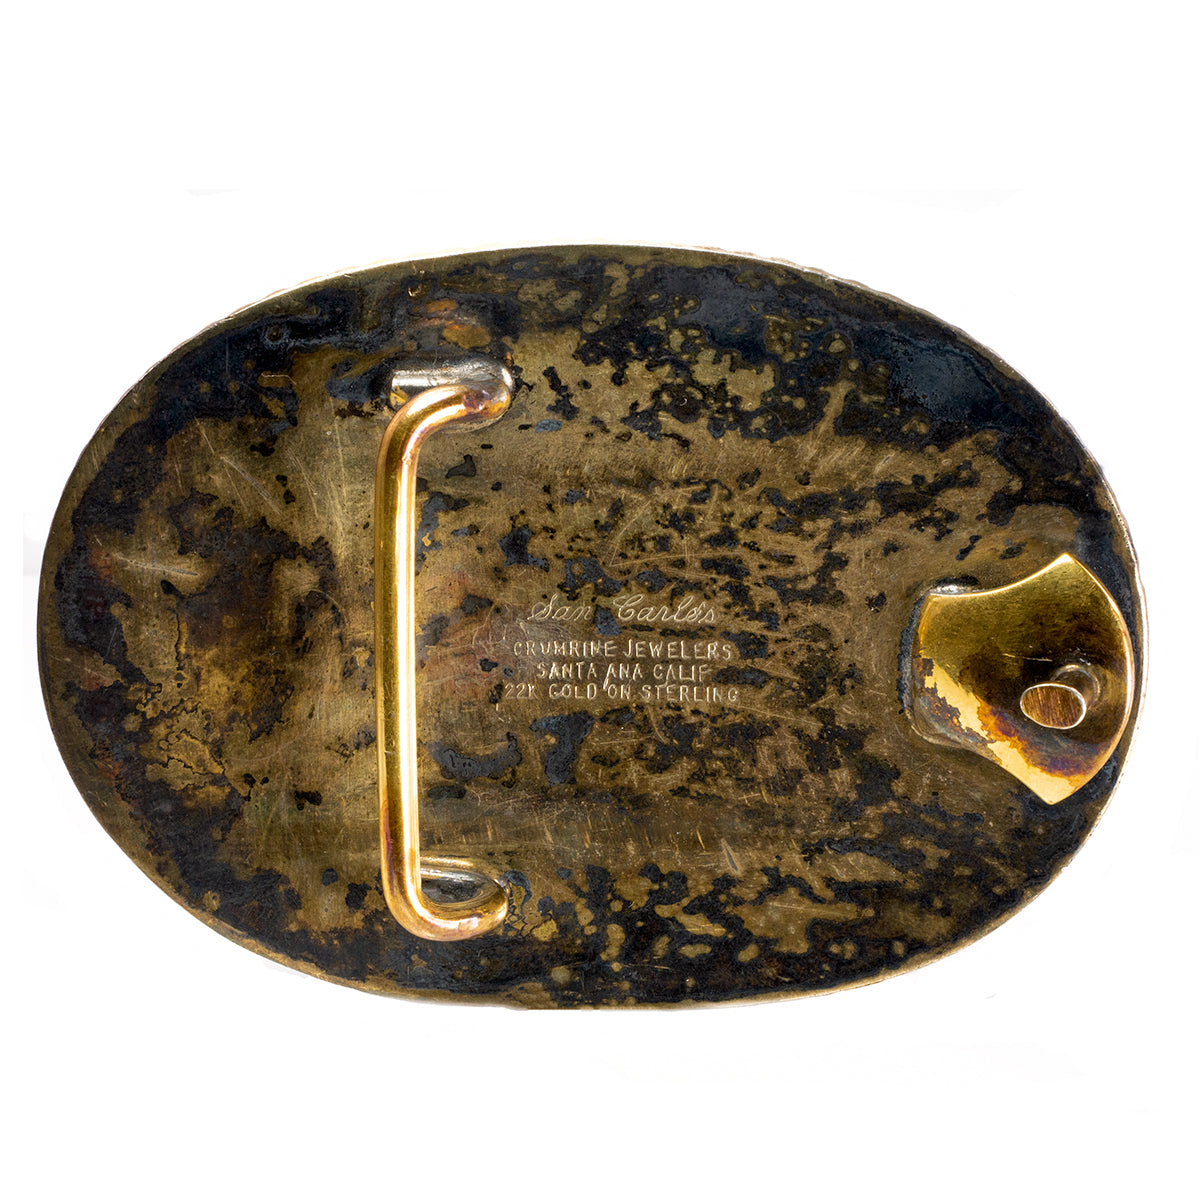 San Carlos Crumrine Jewelers Santa Ana California Silver &amp; Gold Belt Buckle